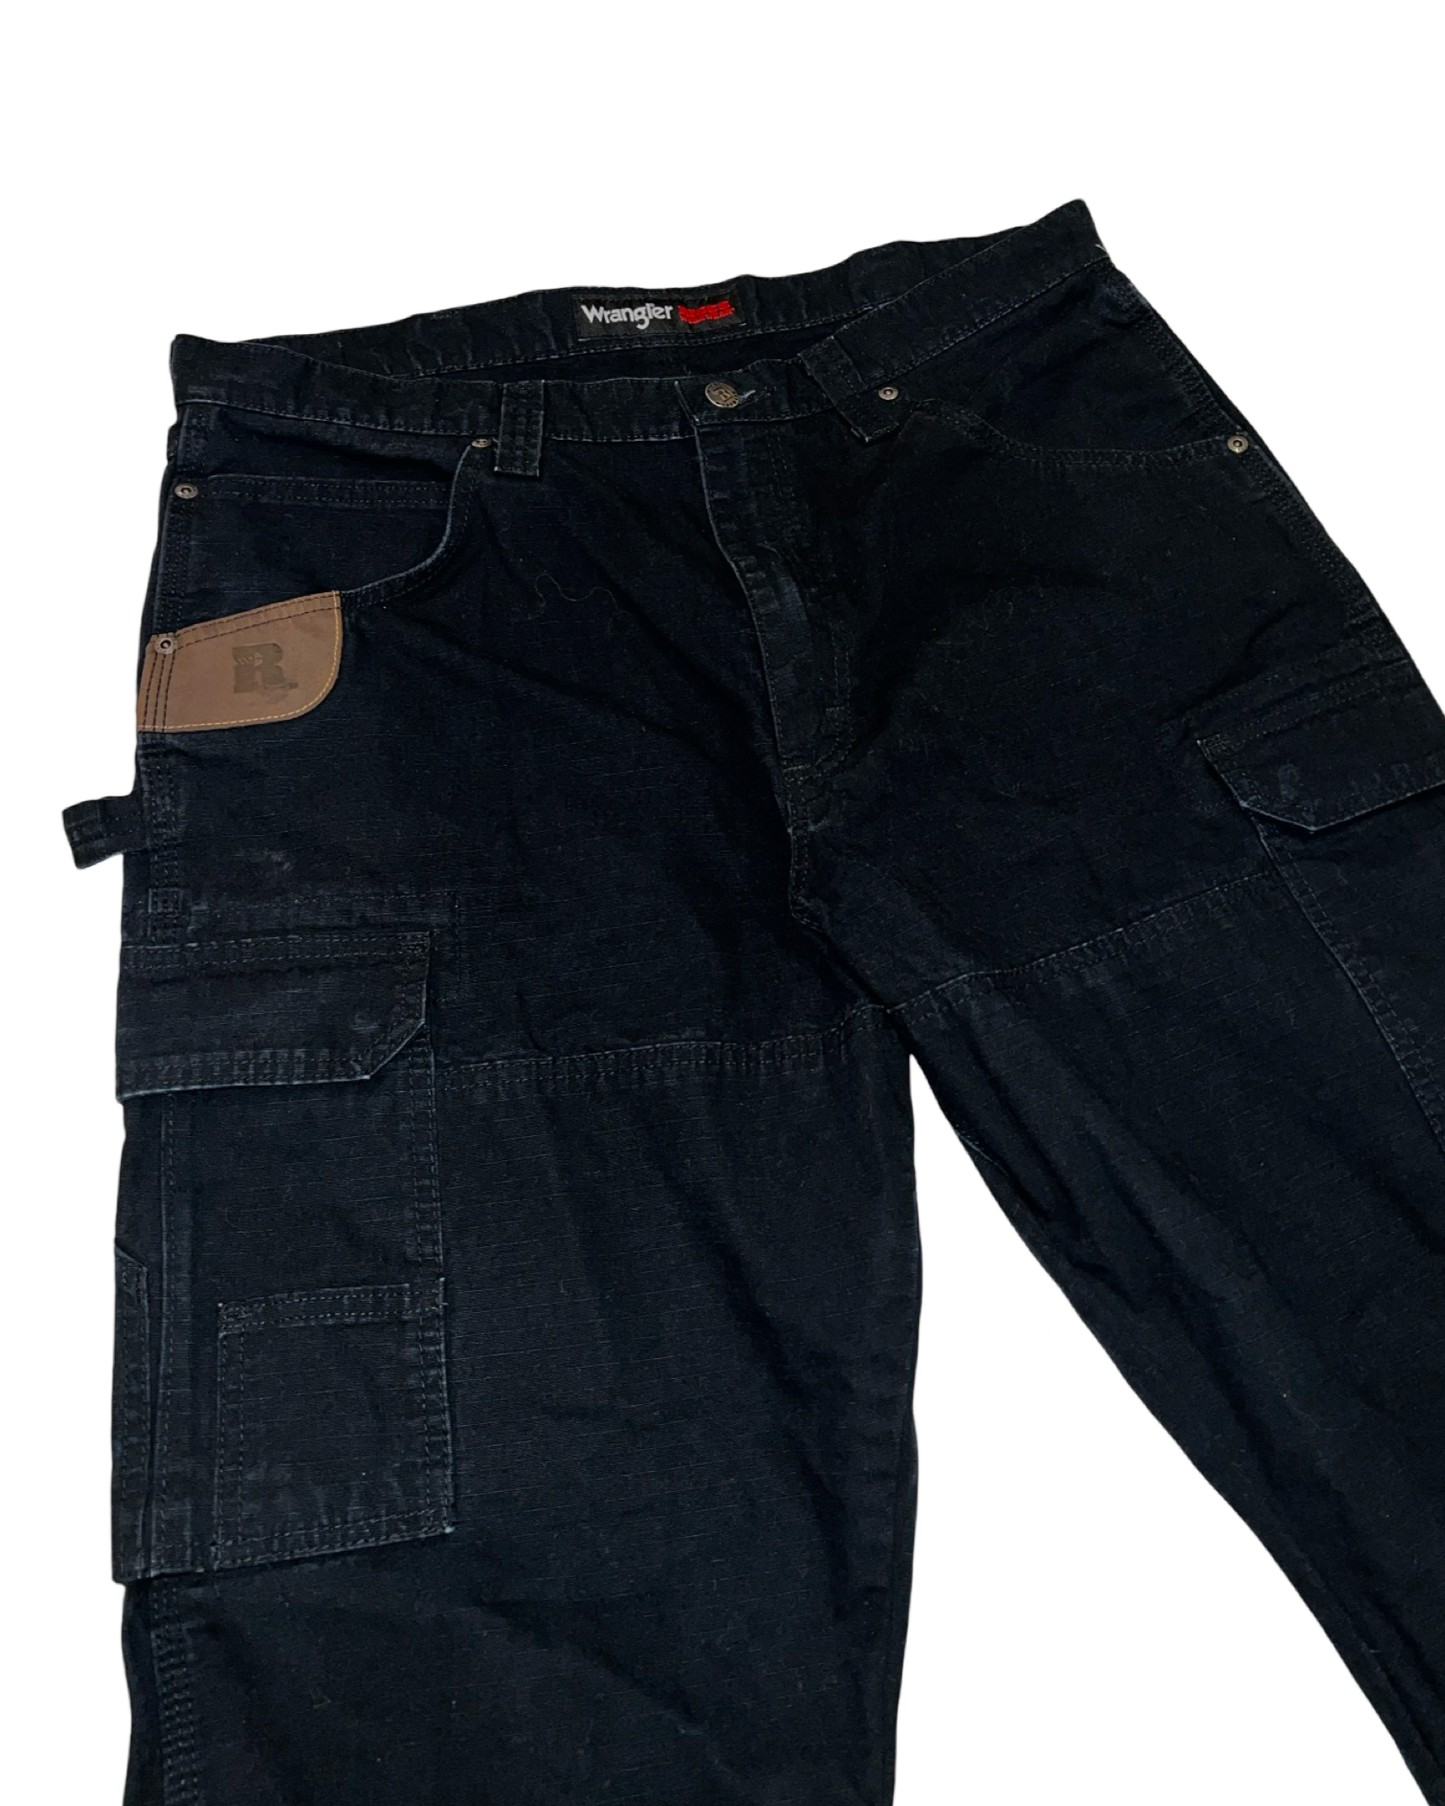 36 x 30 Vintage Wrangler Black Carpenter Pants